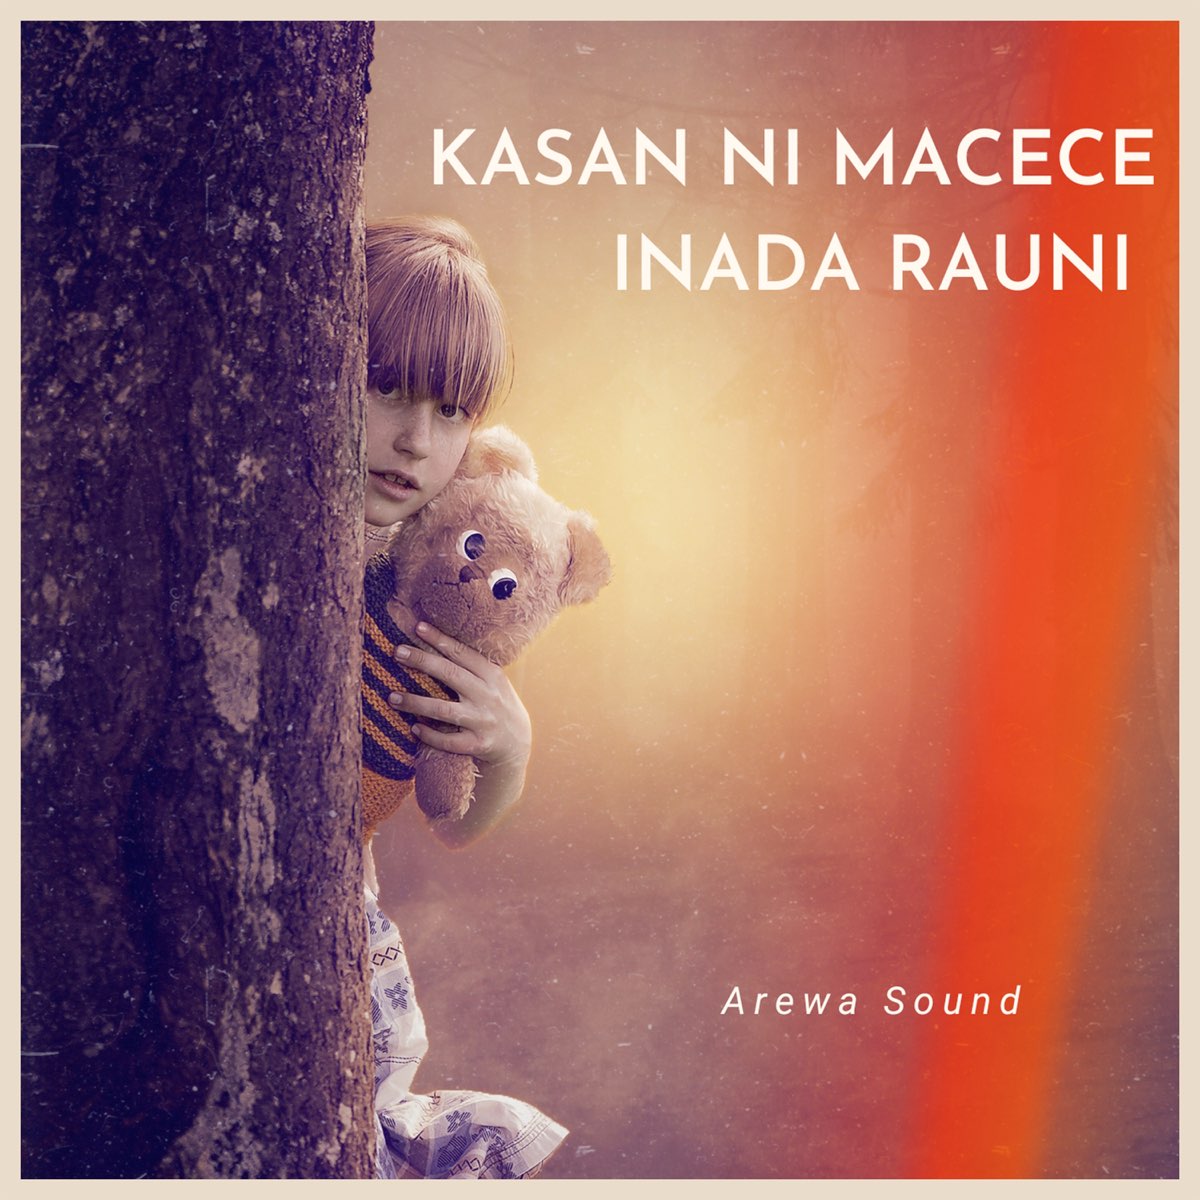 Kasan Ni Macece Inada Rauni - Single by Arewa Sound on Apple Music